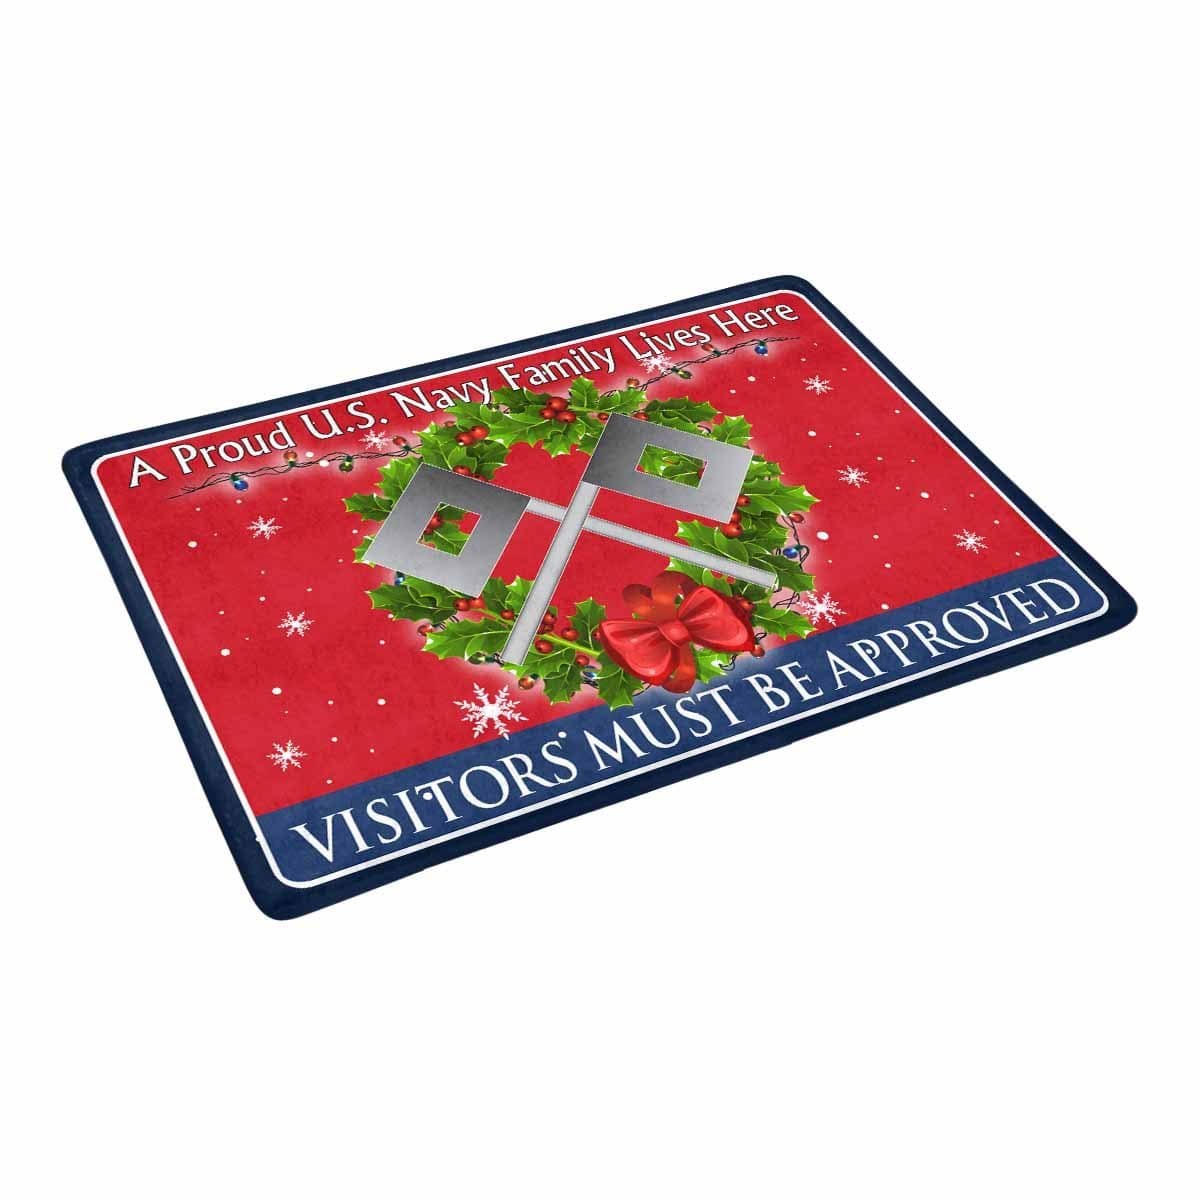 U.S Navy Signalman Navy SN - Visitors must be approved - Christmas Doormat-Doormat-Navy-Rate-Veterans Nation